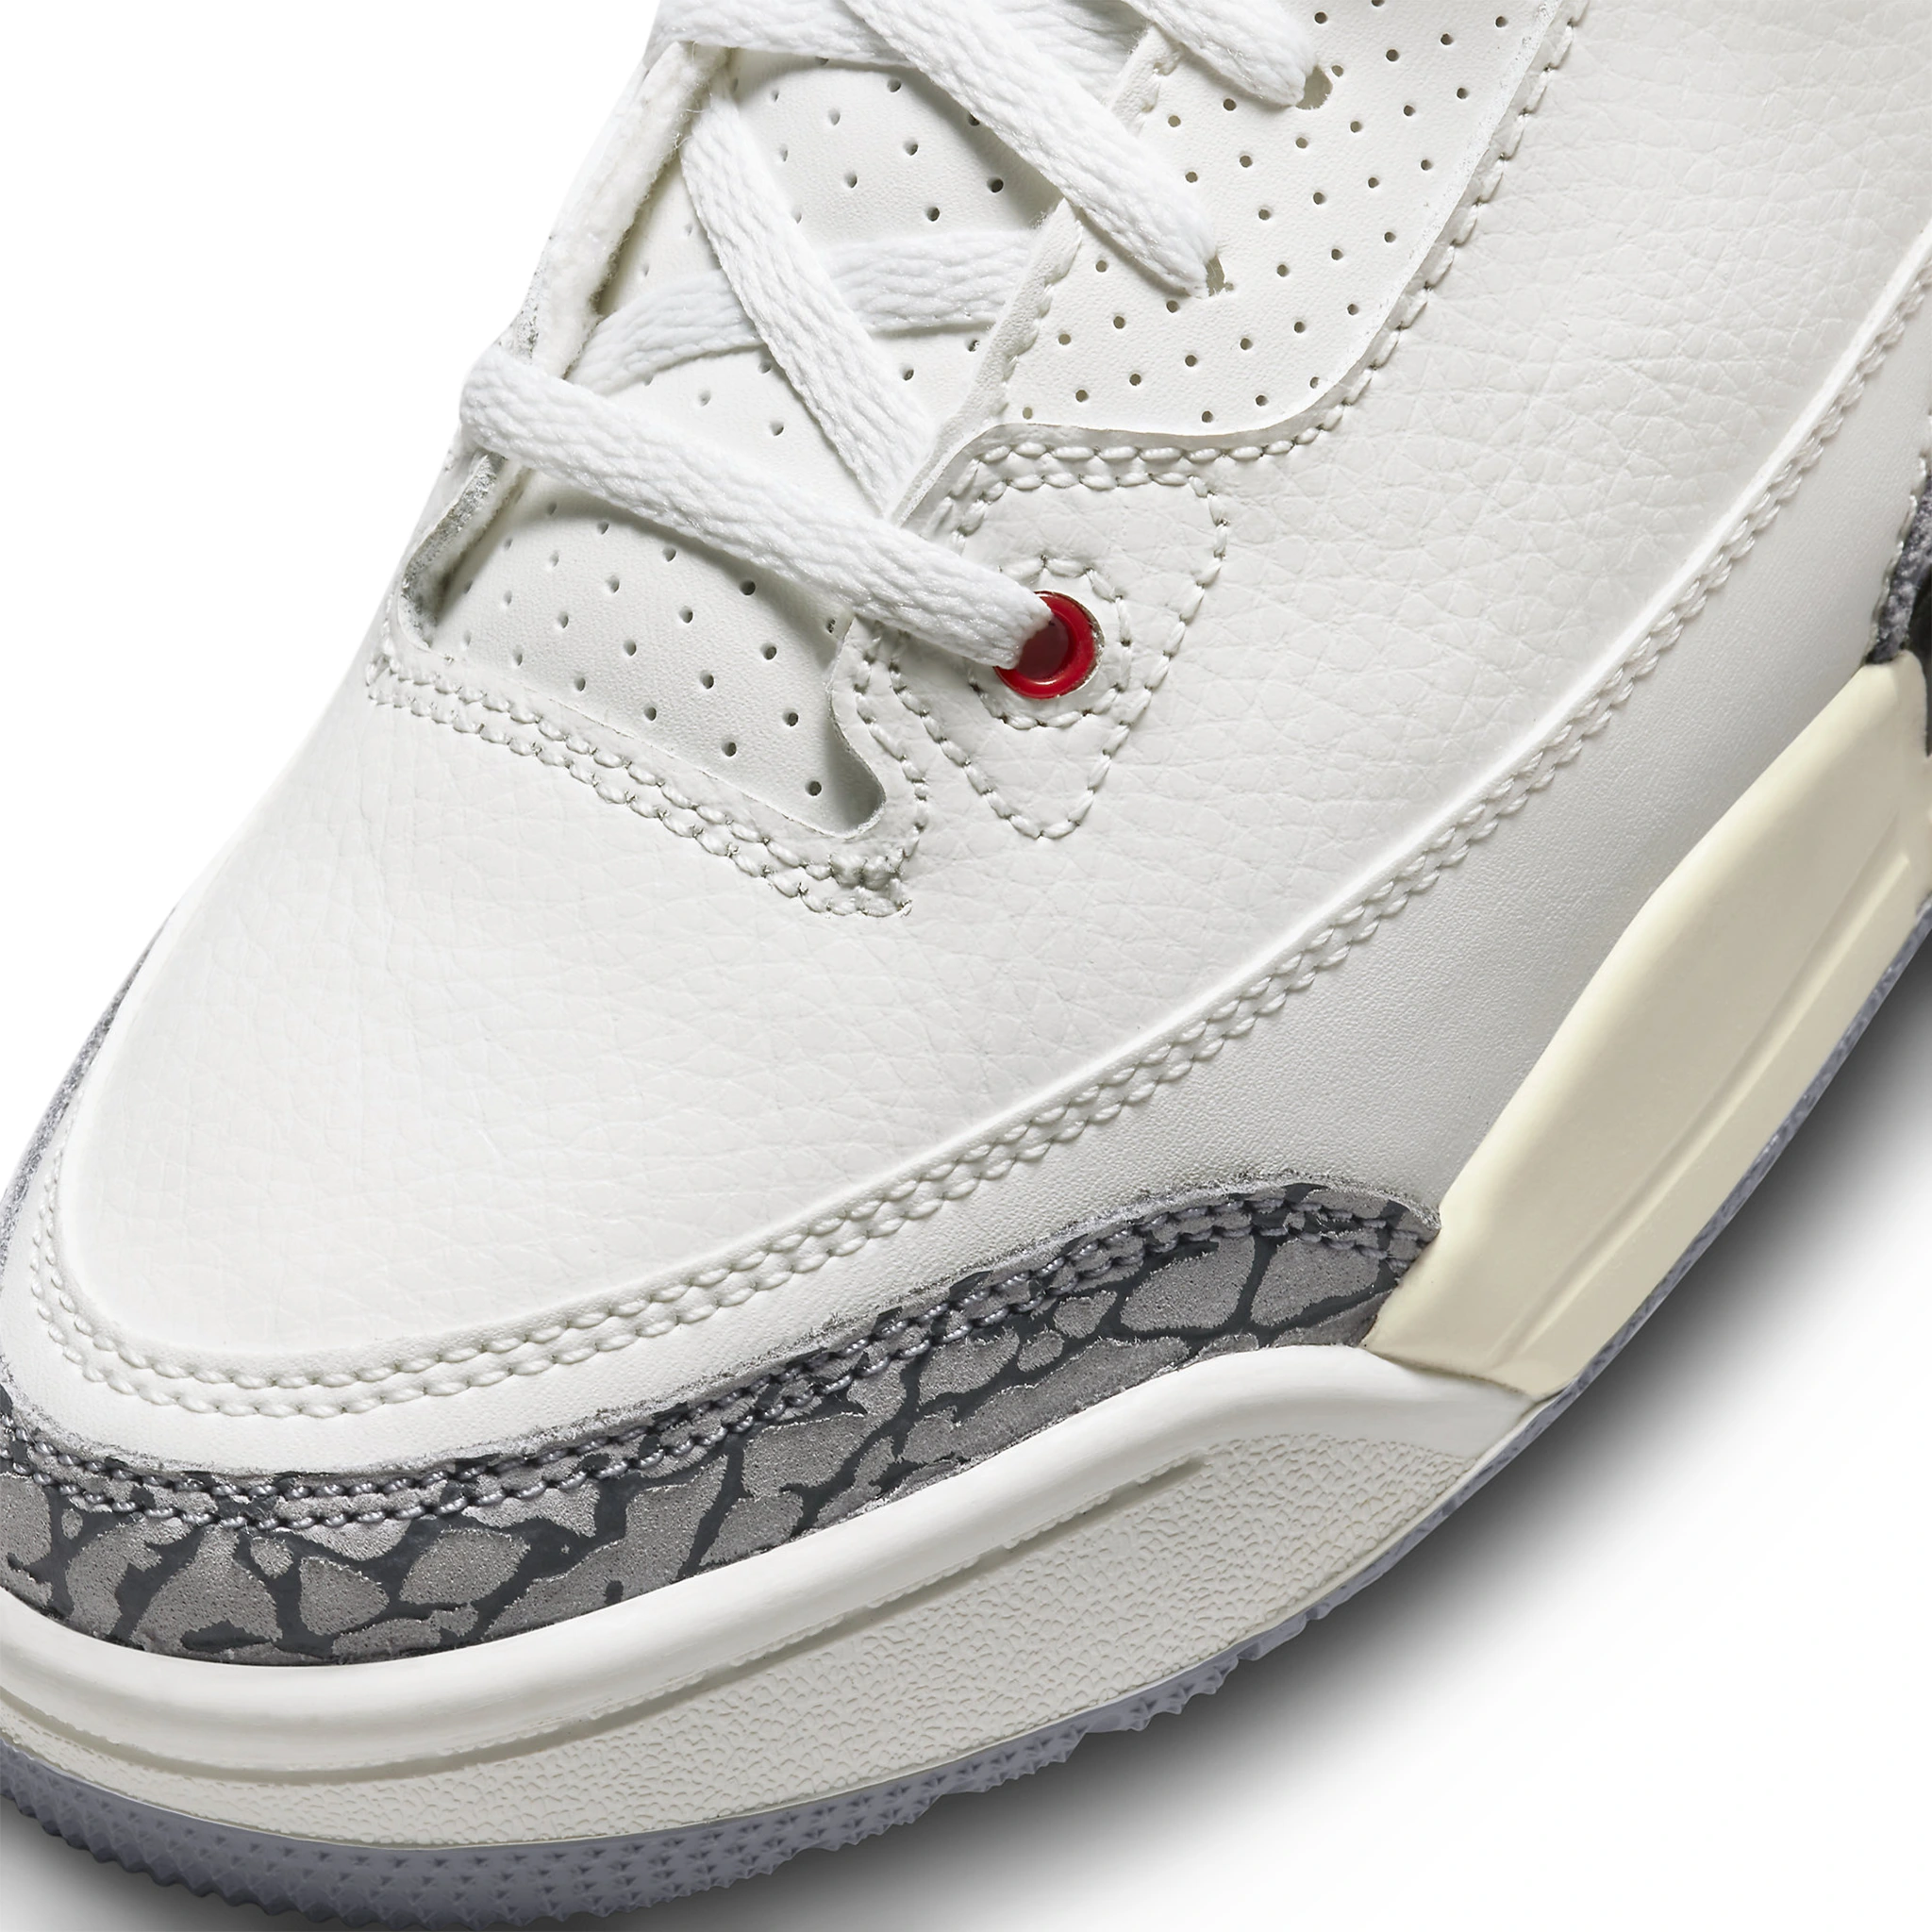 Toe box view of Air Jordan 3 Retro White Cement Reimagined (PS)